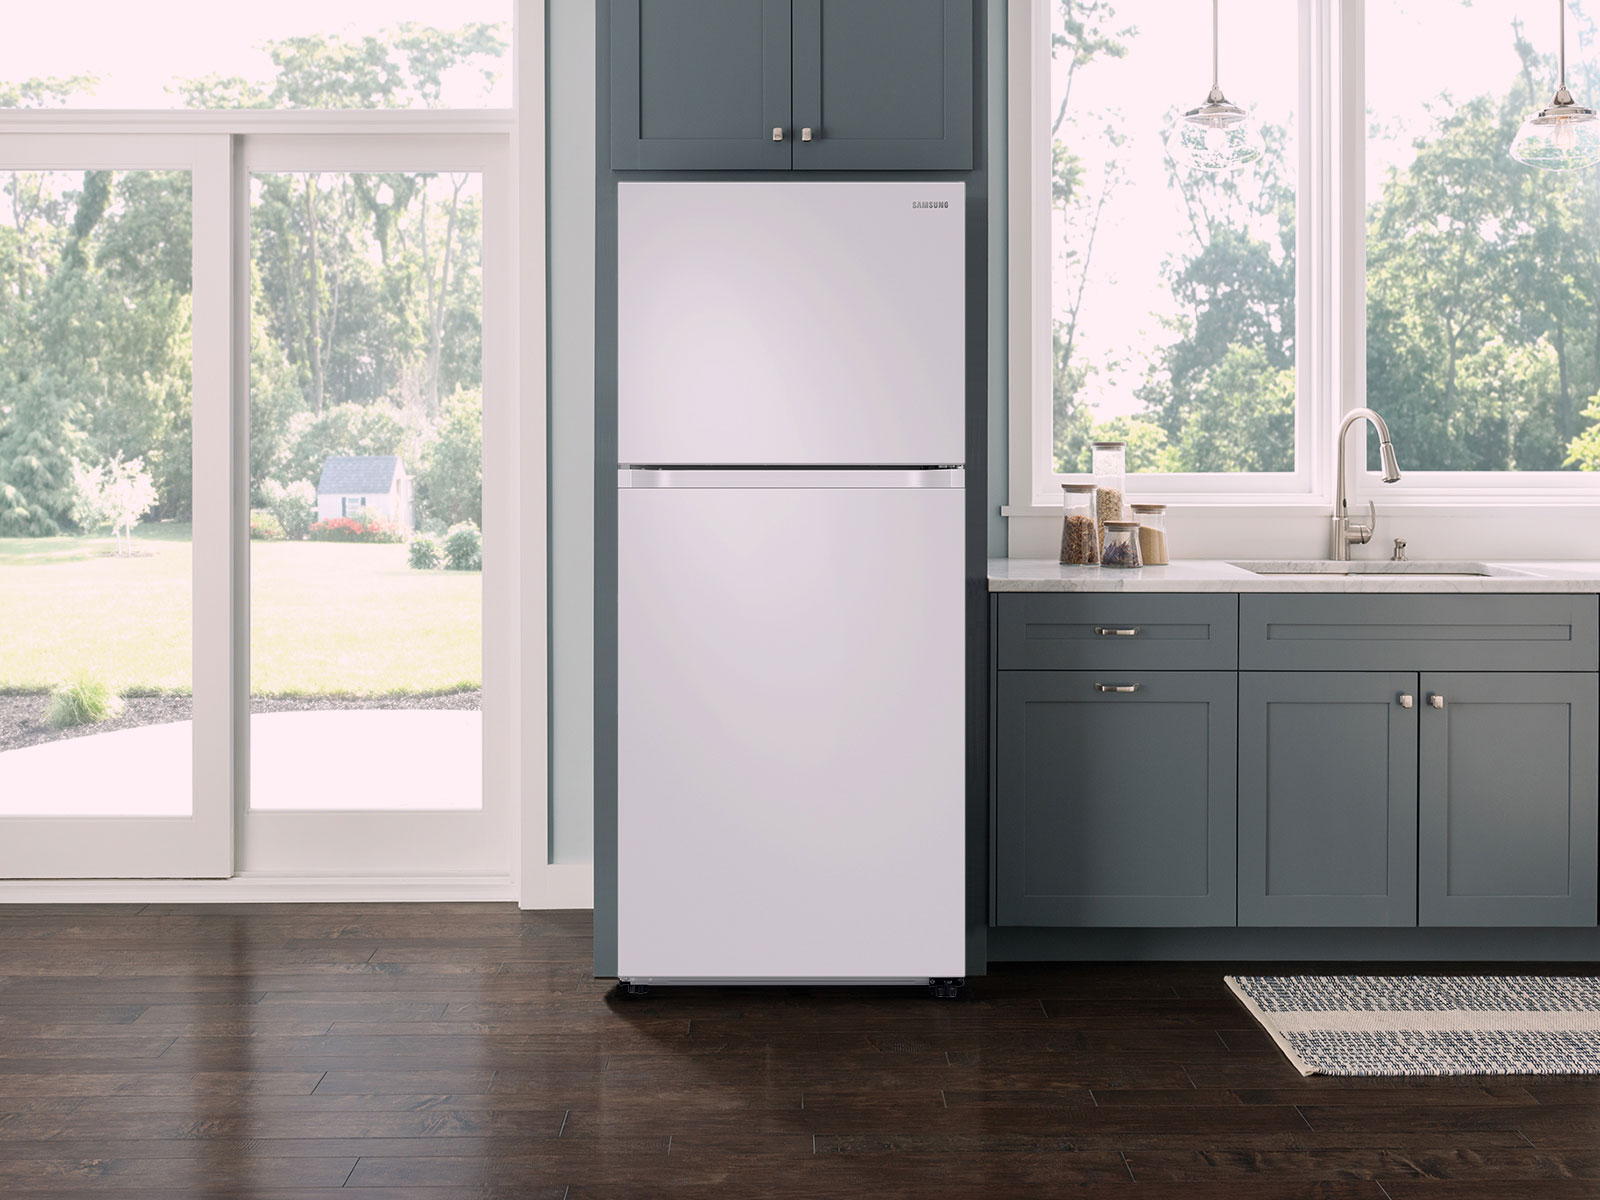 Samsung 21 Cu. ft. Top Freezer Refrigerator with FlexZone - Stainless Steel